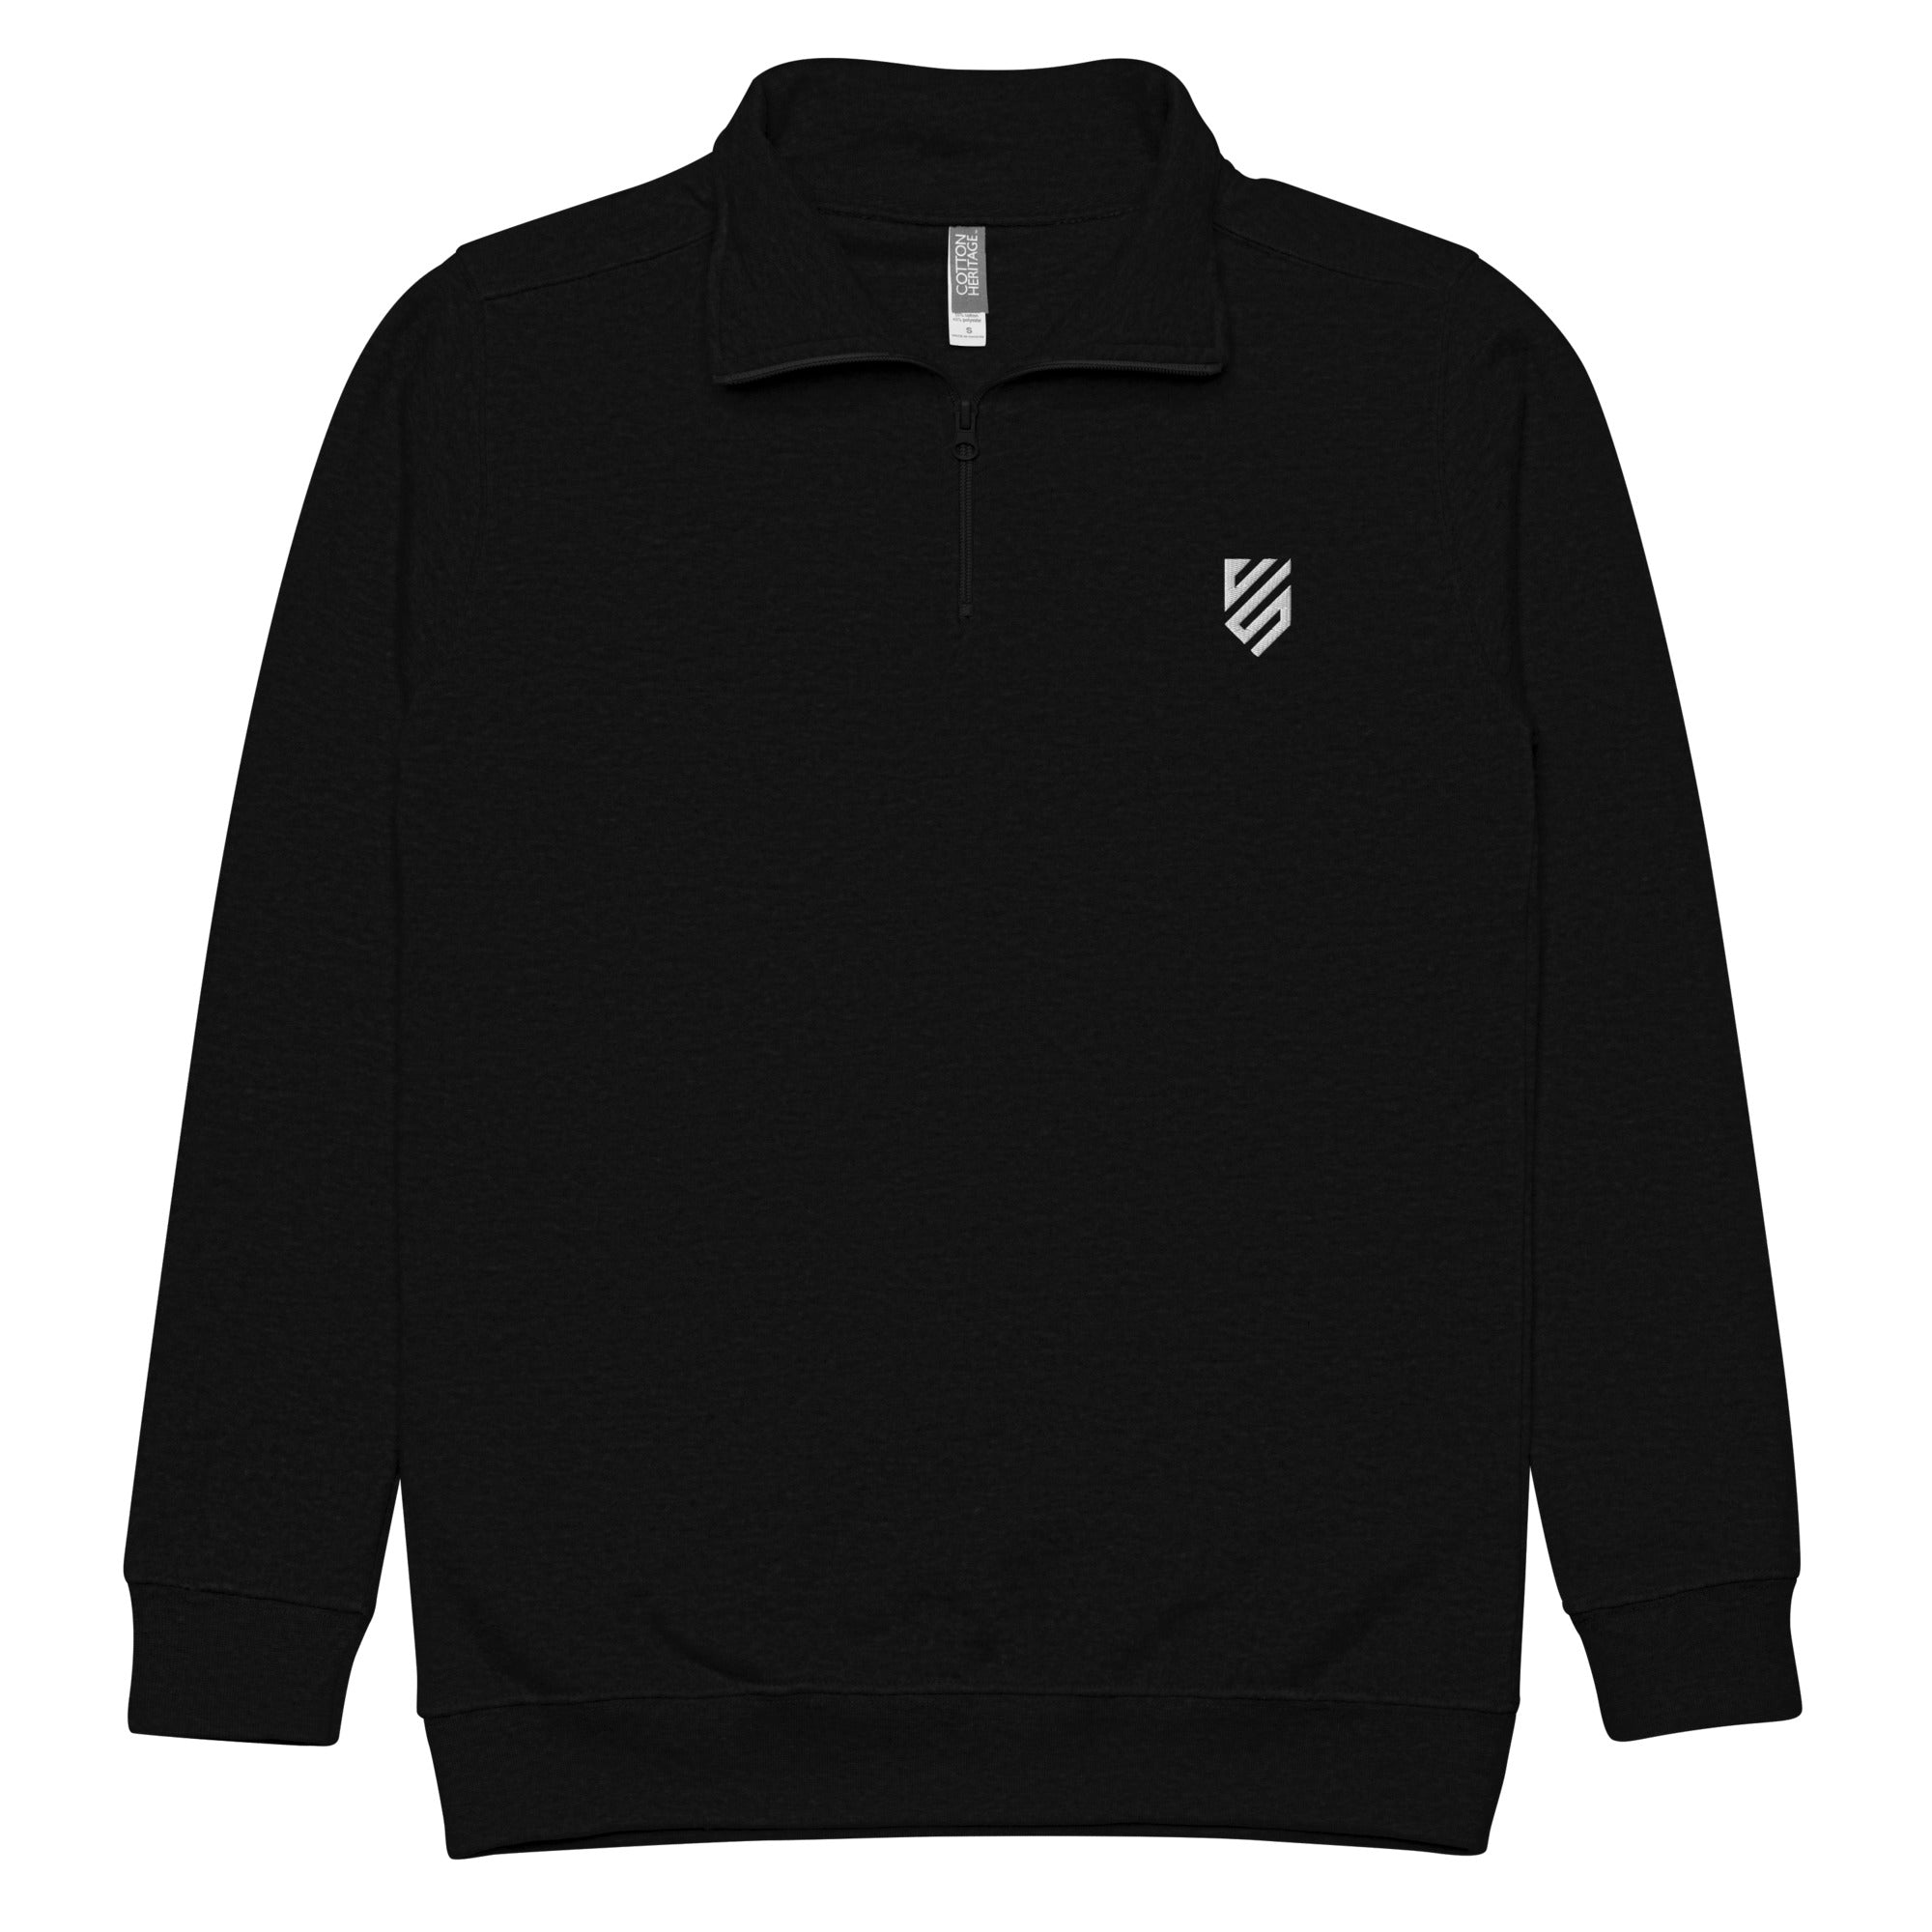 unisex-fleece-pullover-black-front-64cc1a87b42e0.jpg